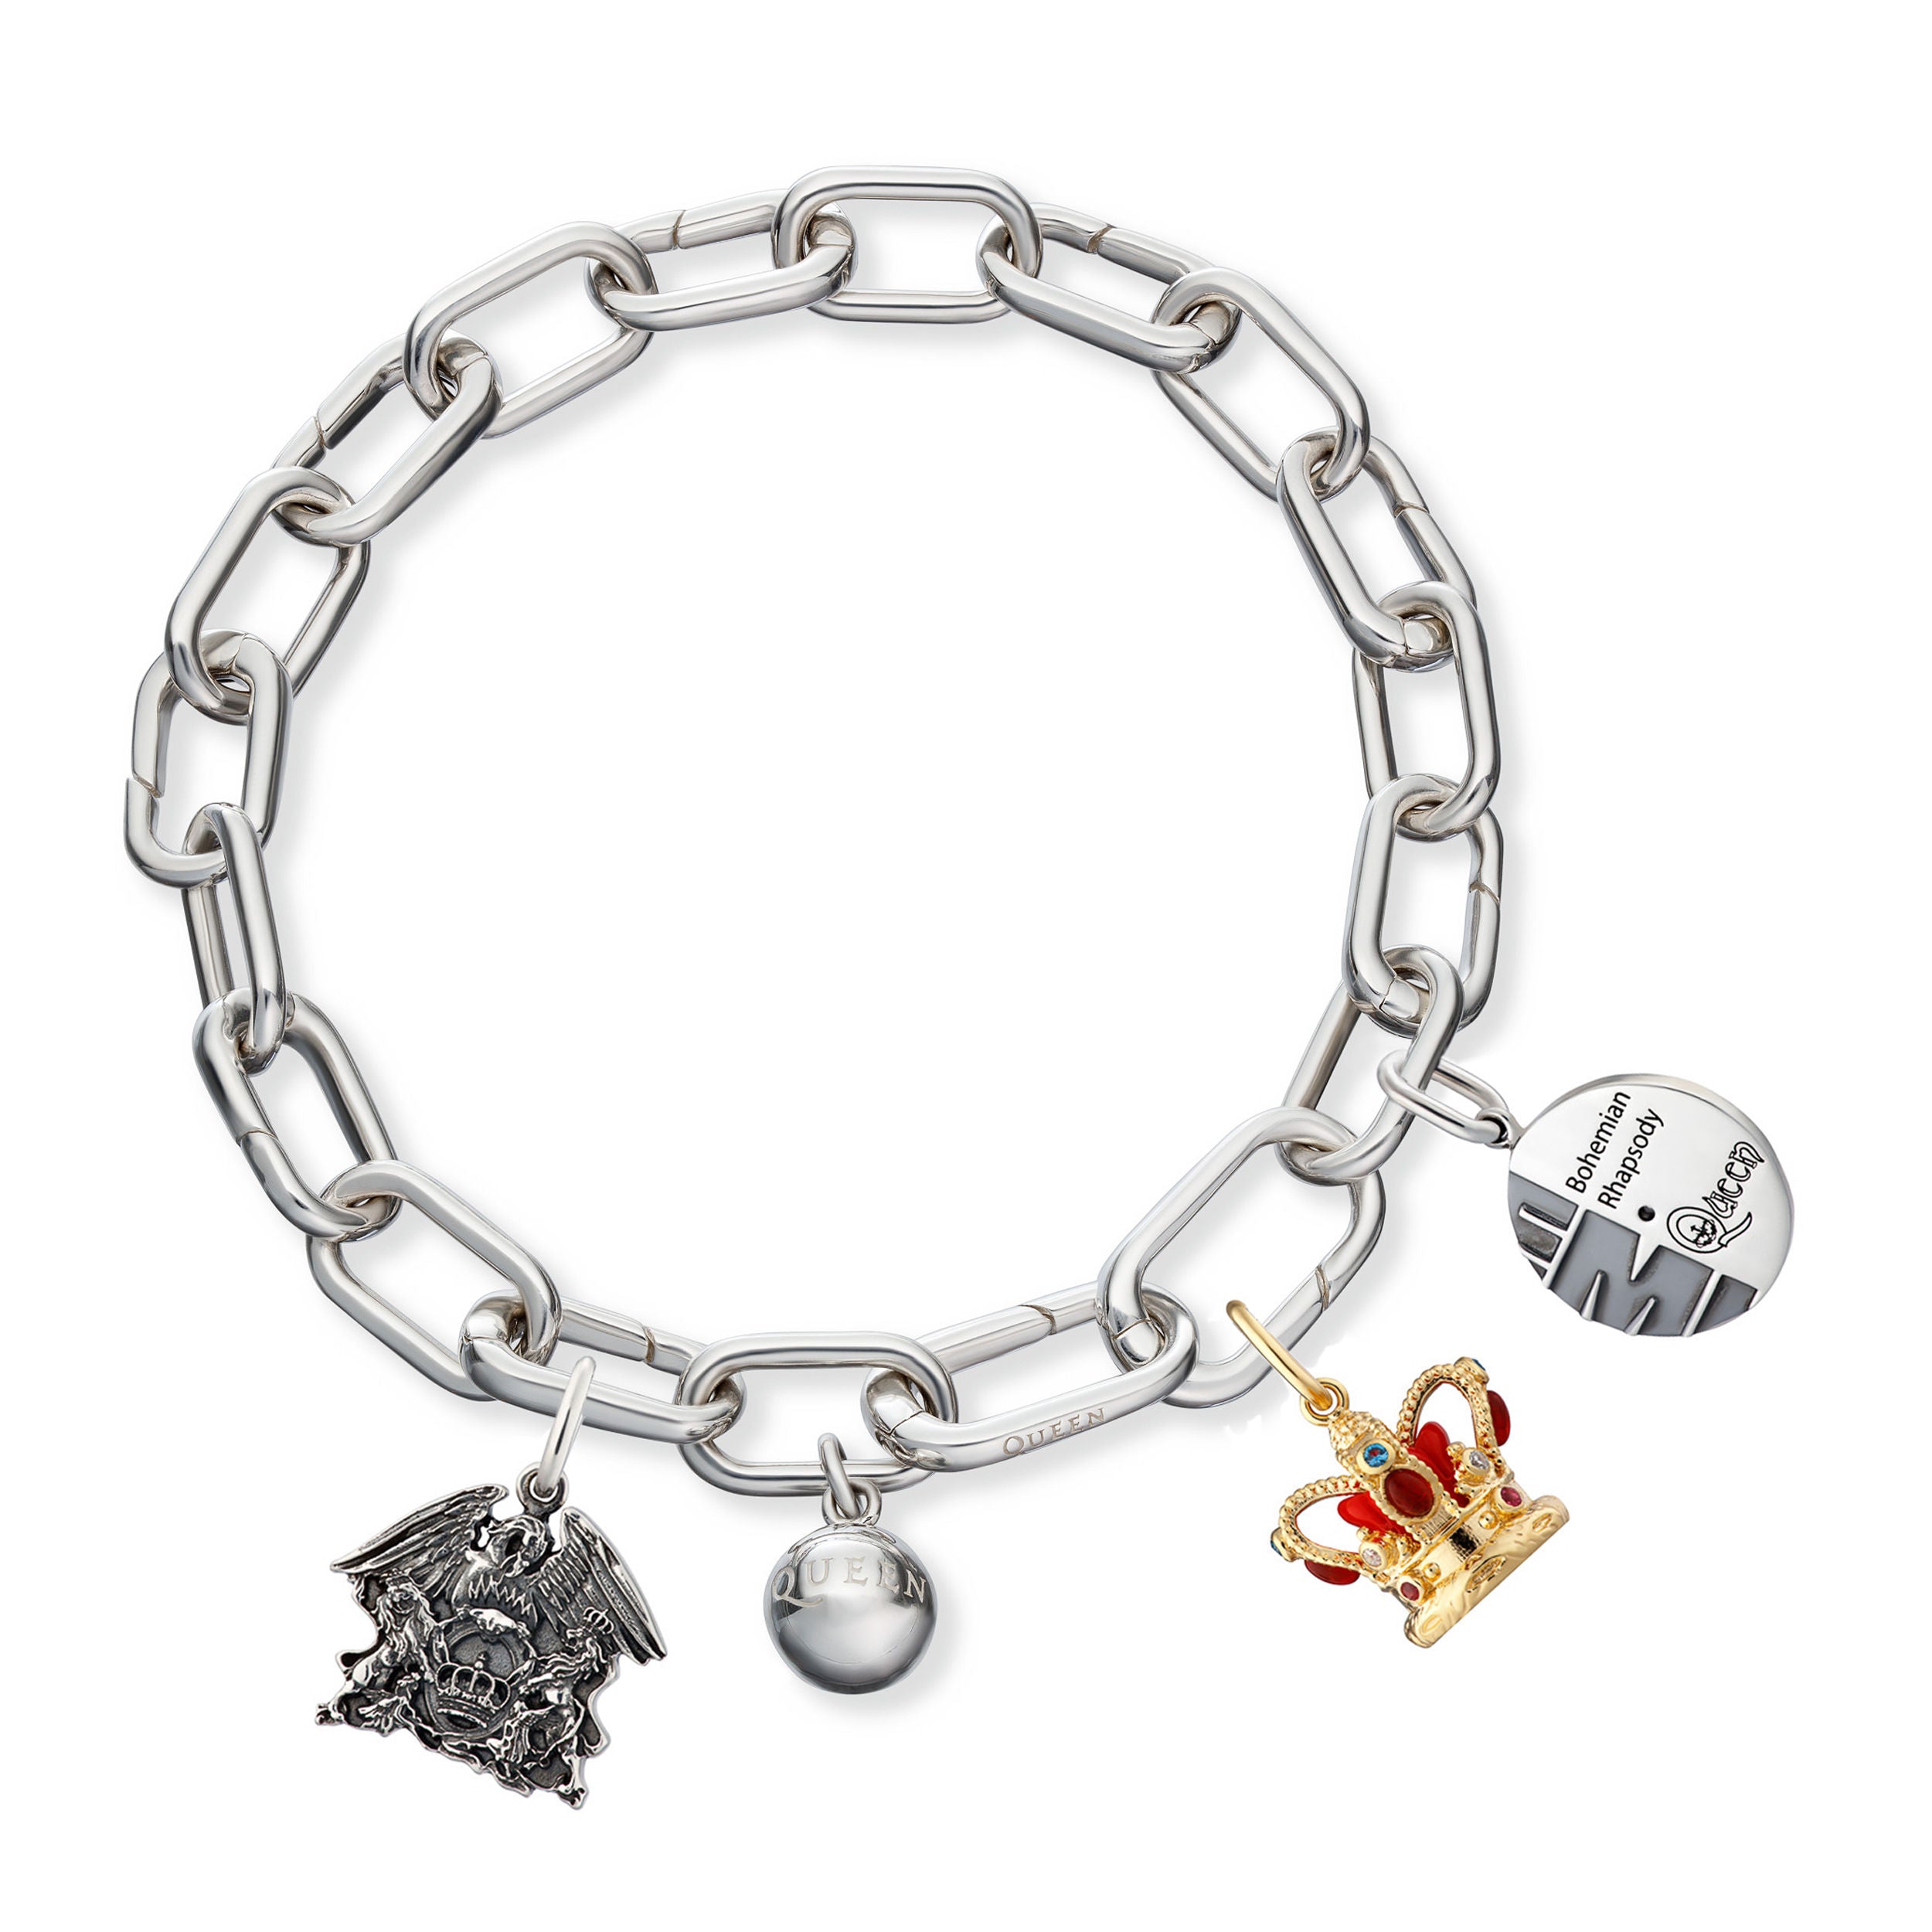 Antique Lady's Solid Silver Charms Bracelet | ANTIQUES.CO.UK |